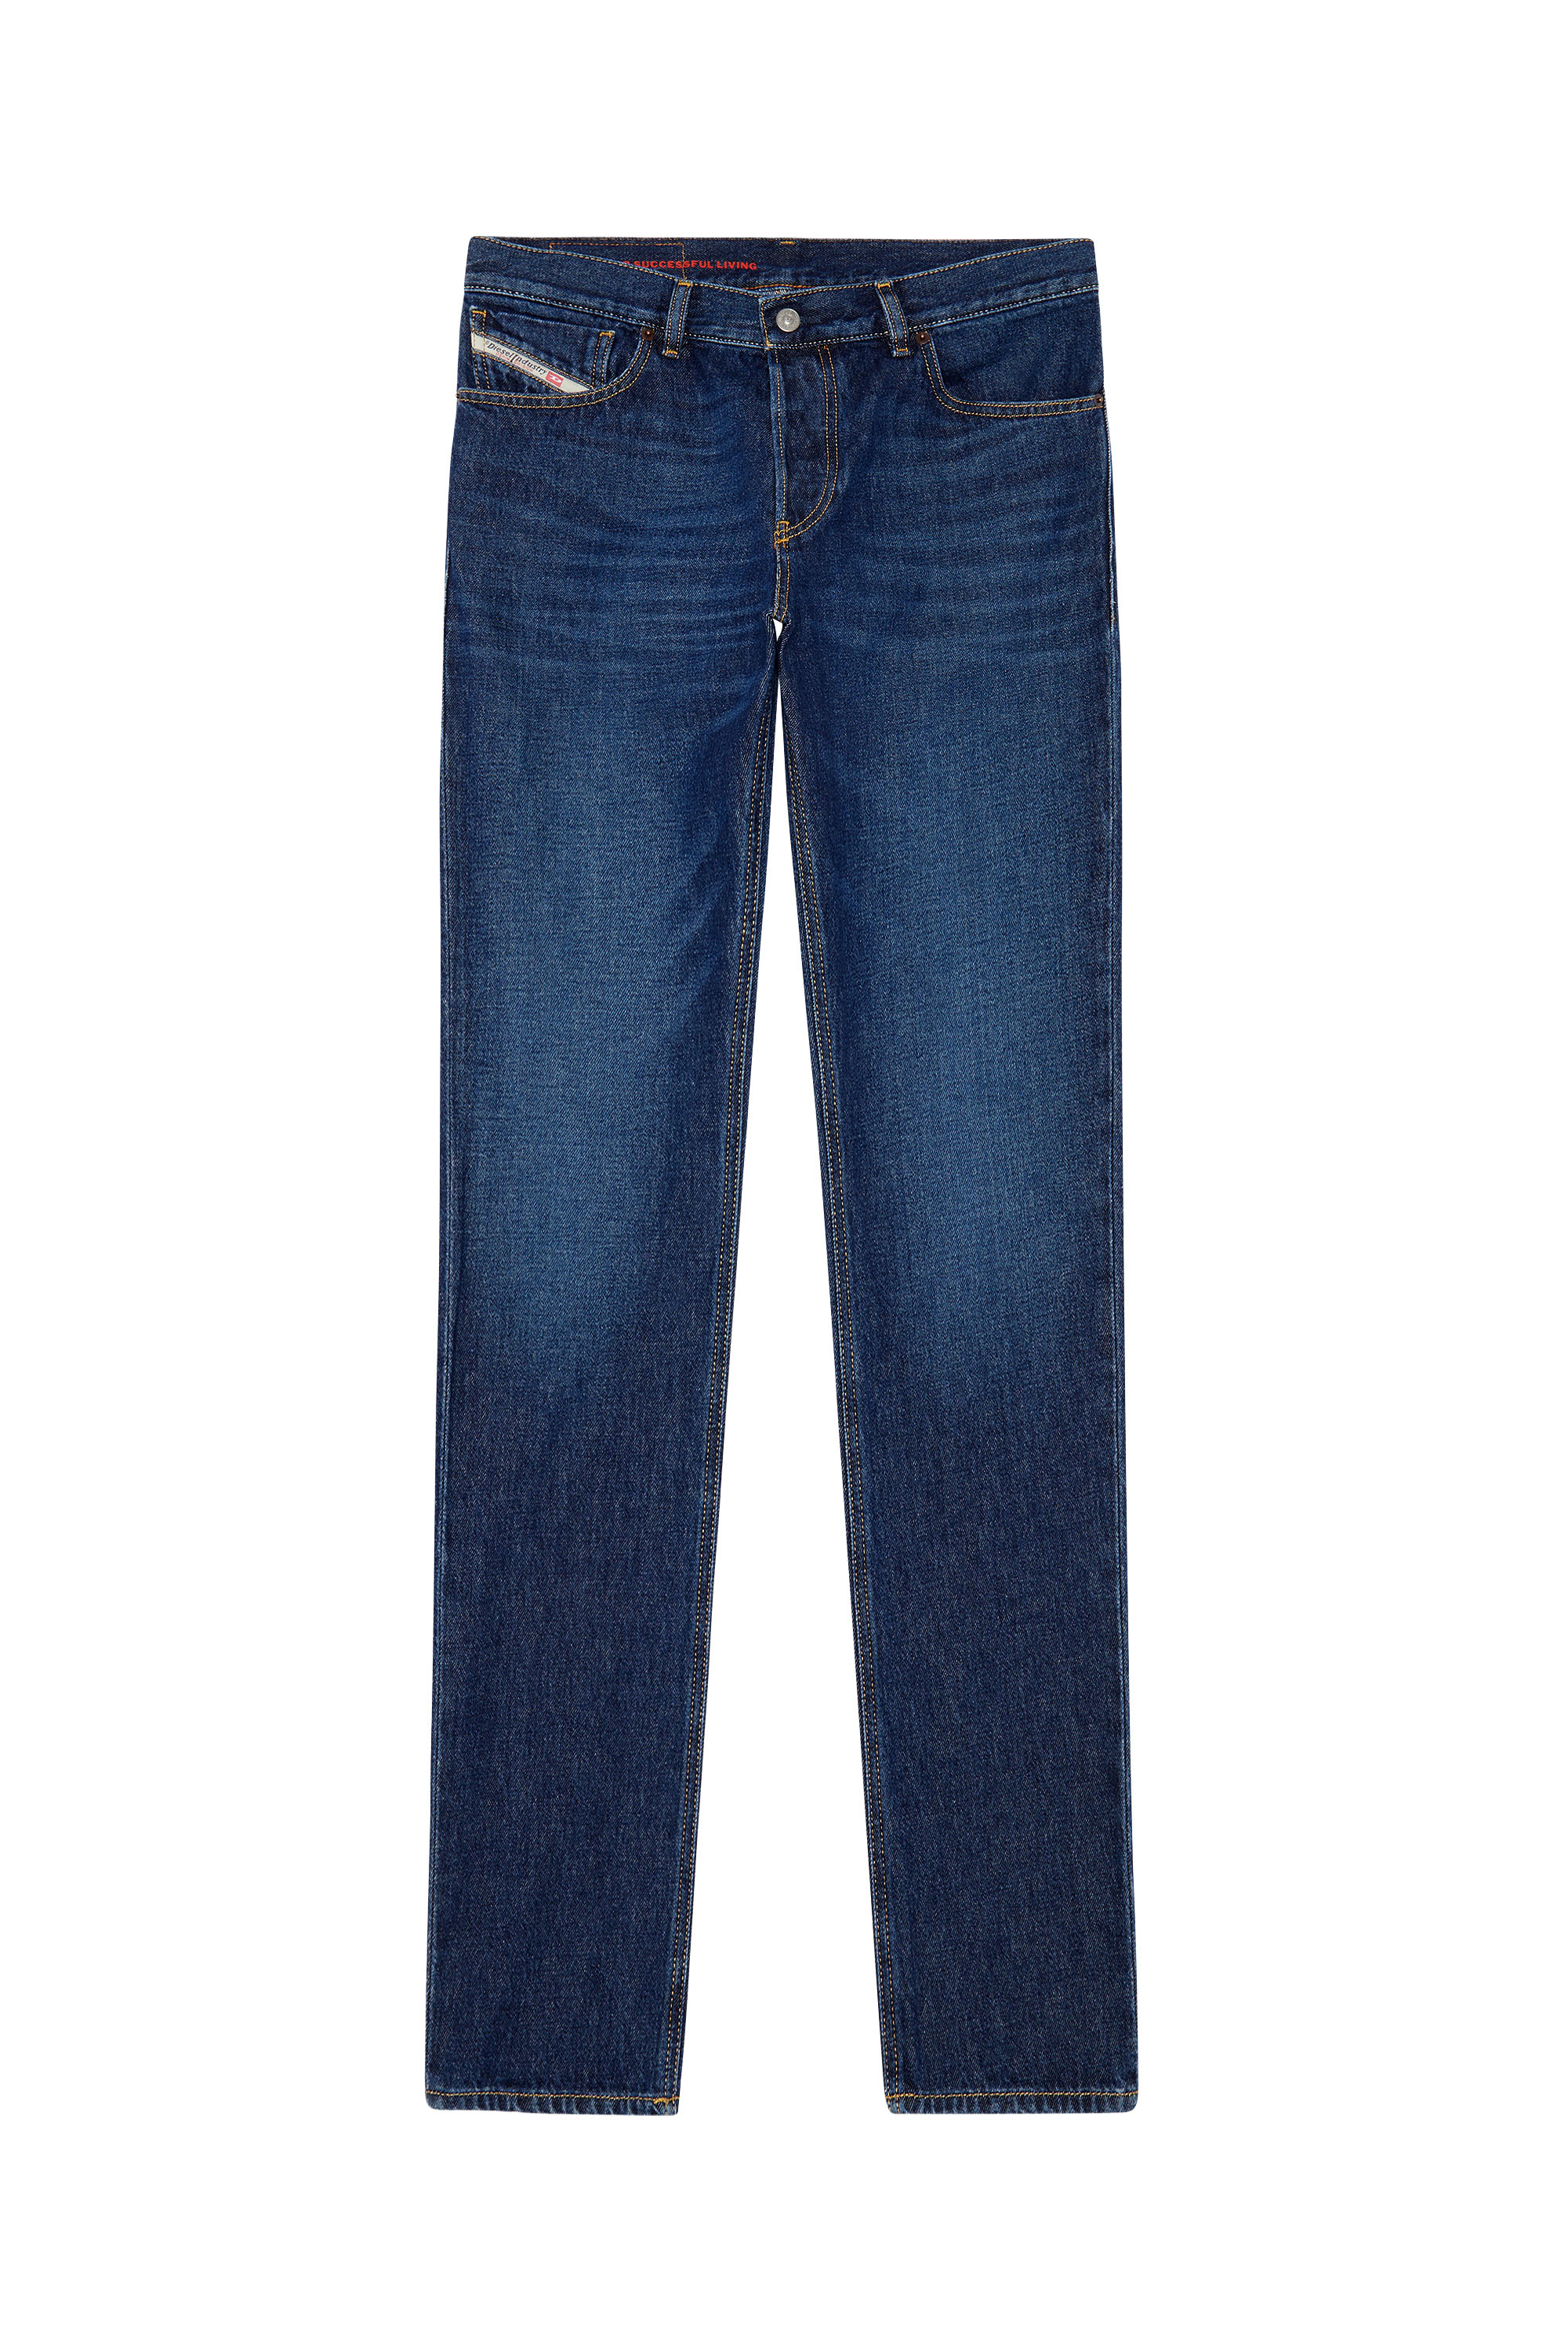 1995 D-SARK 09C03 Straight Jeans, Dunkelblau - Jeans